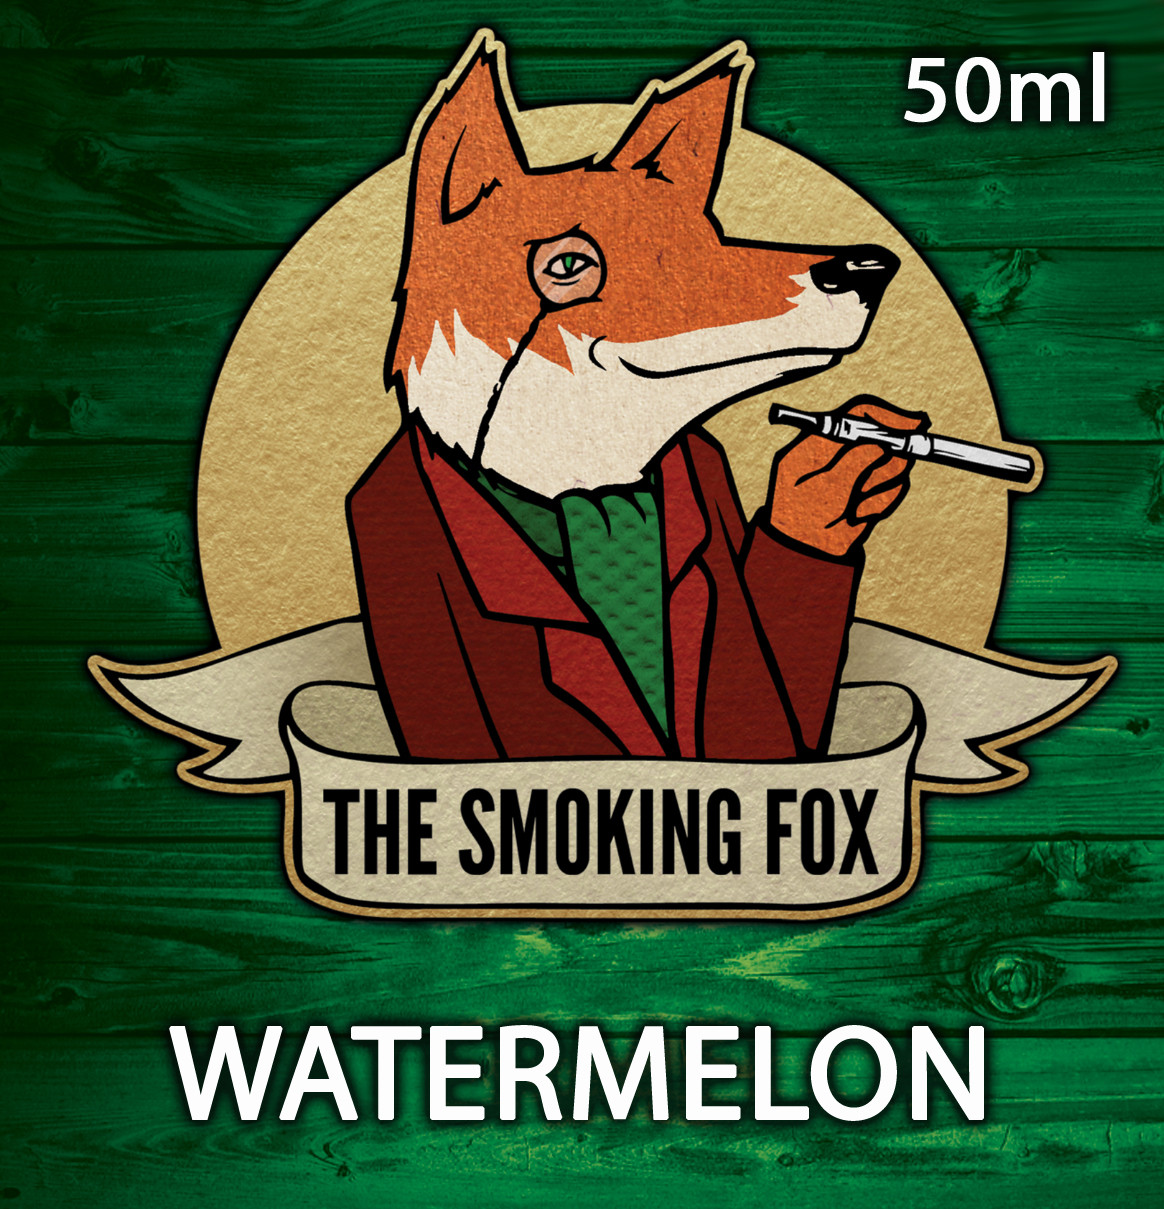 THE SMOKING FOX 50ml - WATERMELON